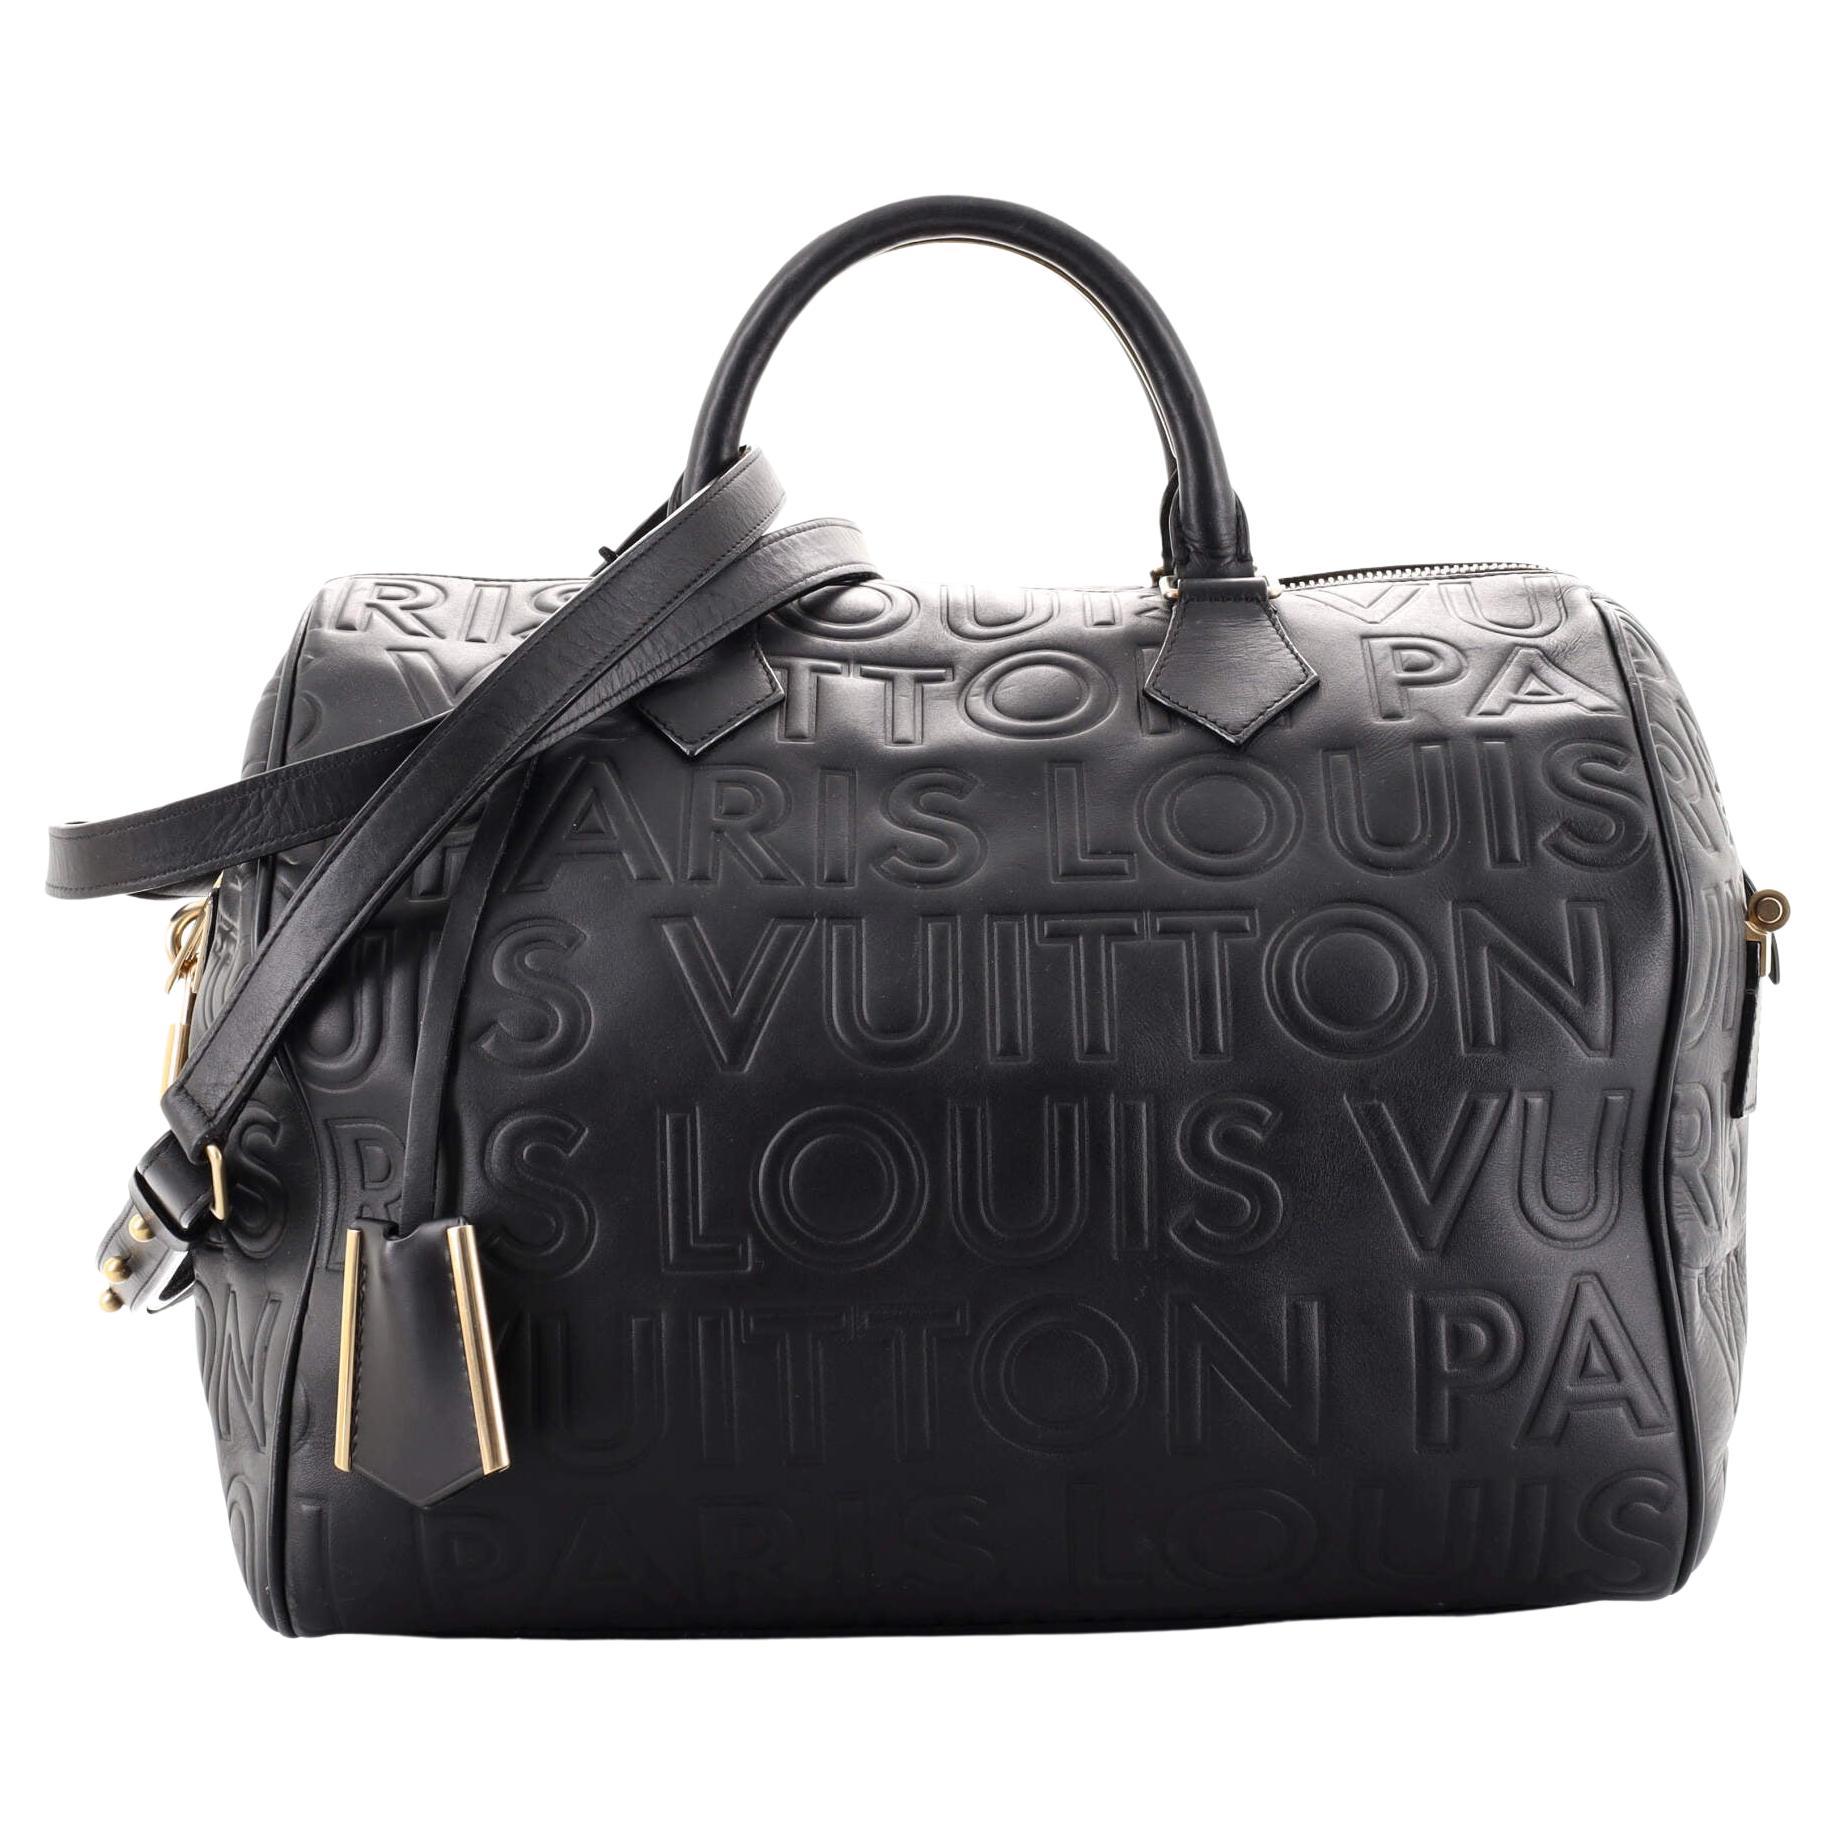 Louis Vuitton 2013 pre-owned Speedy Cube PM Tote Bag - Farfetch